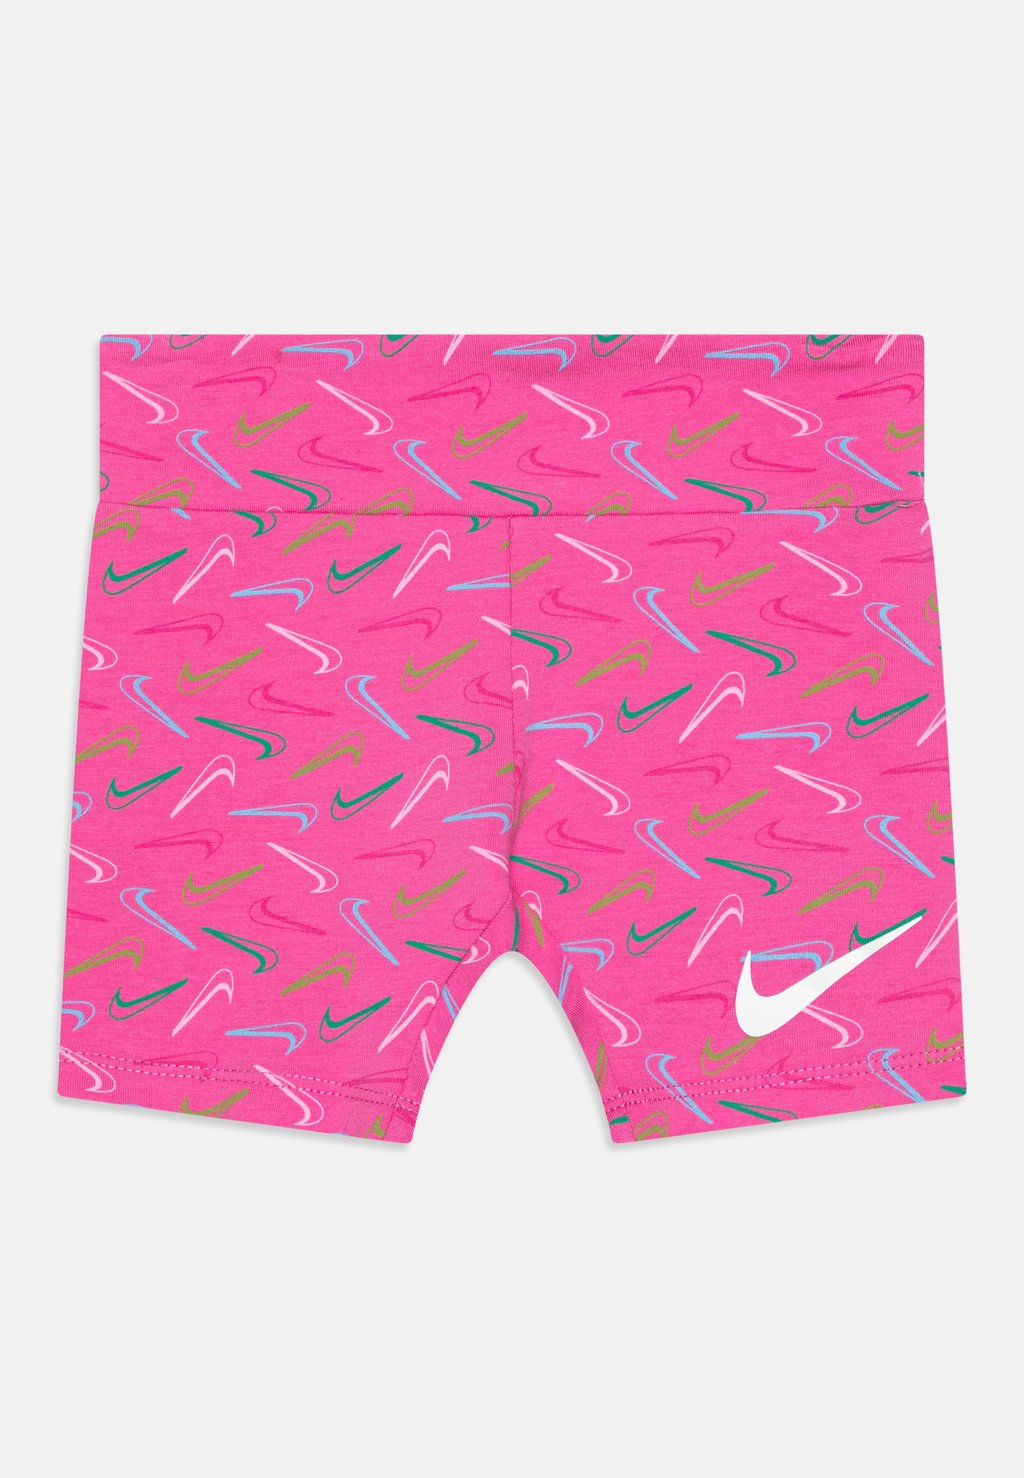 Шорты LOGO BIKE Nike Sportswear, цвет playful pink леггинсы universa nike цвет playful pink